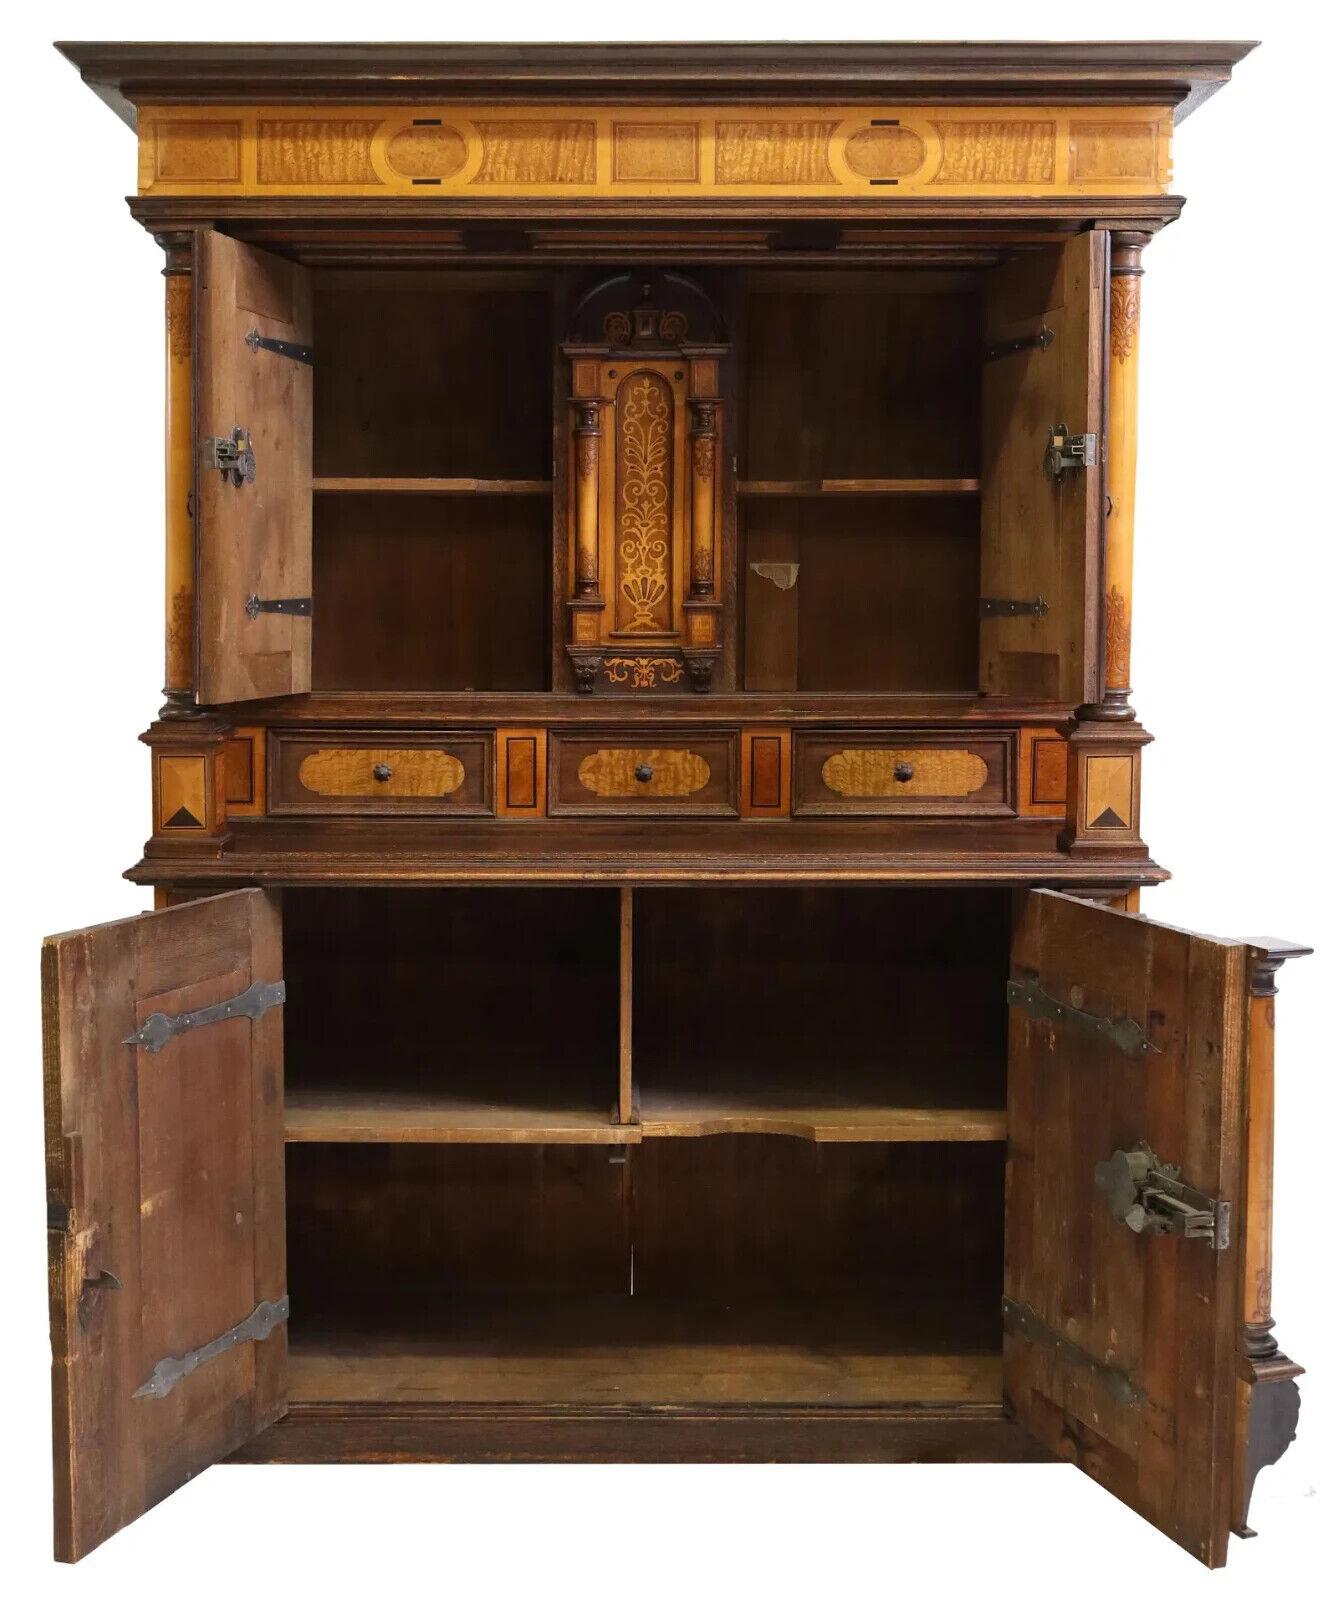 European 1800s Antique Renaissance Revival, Inlaid Carved Oak, with Shelves, Cupboard